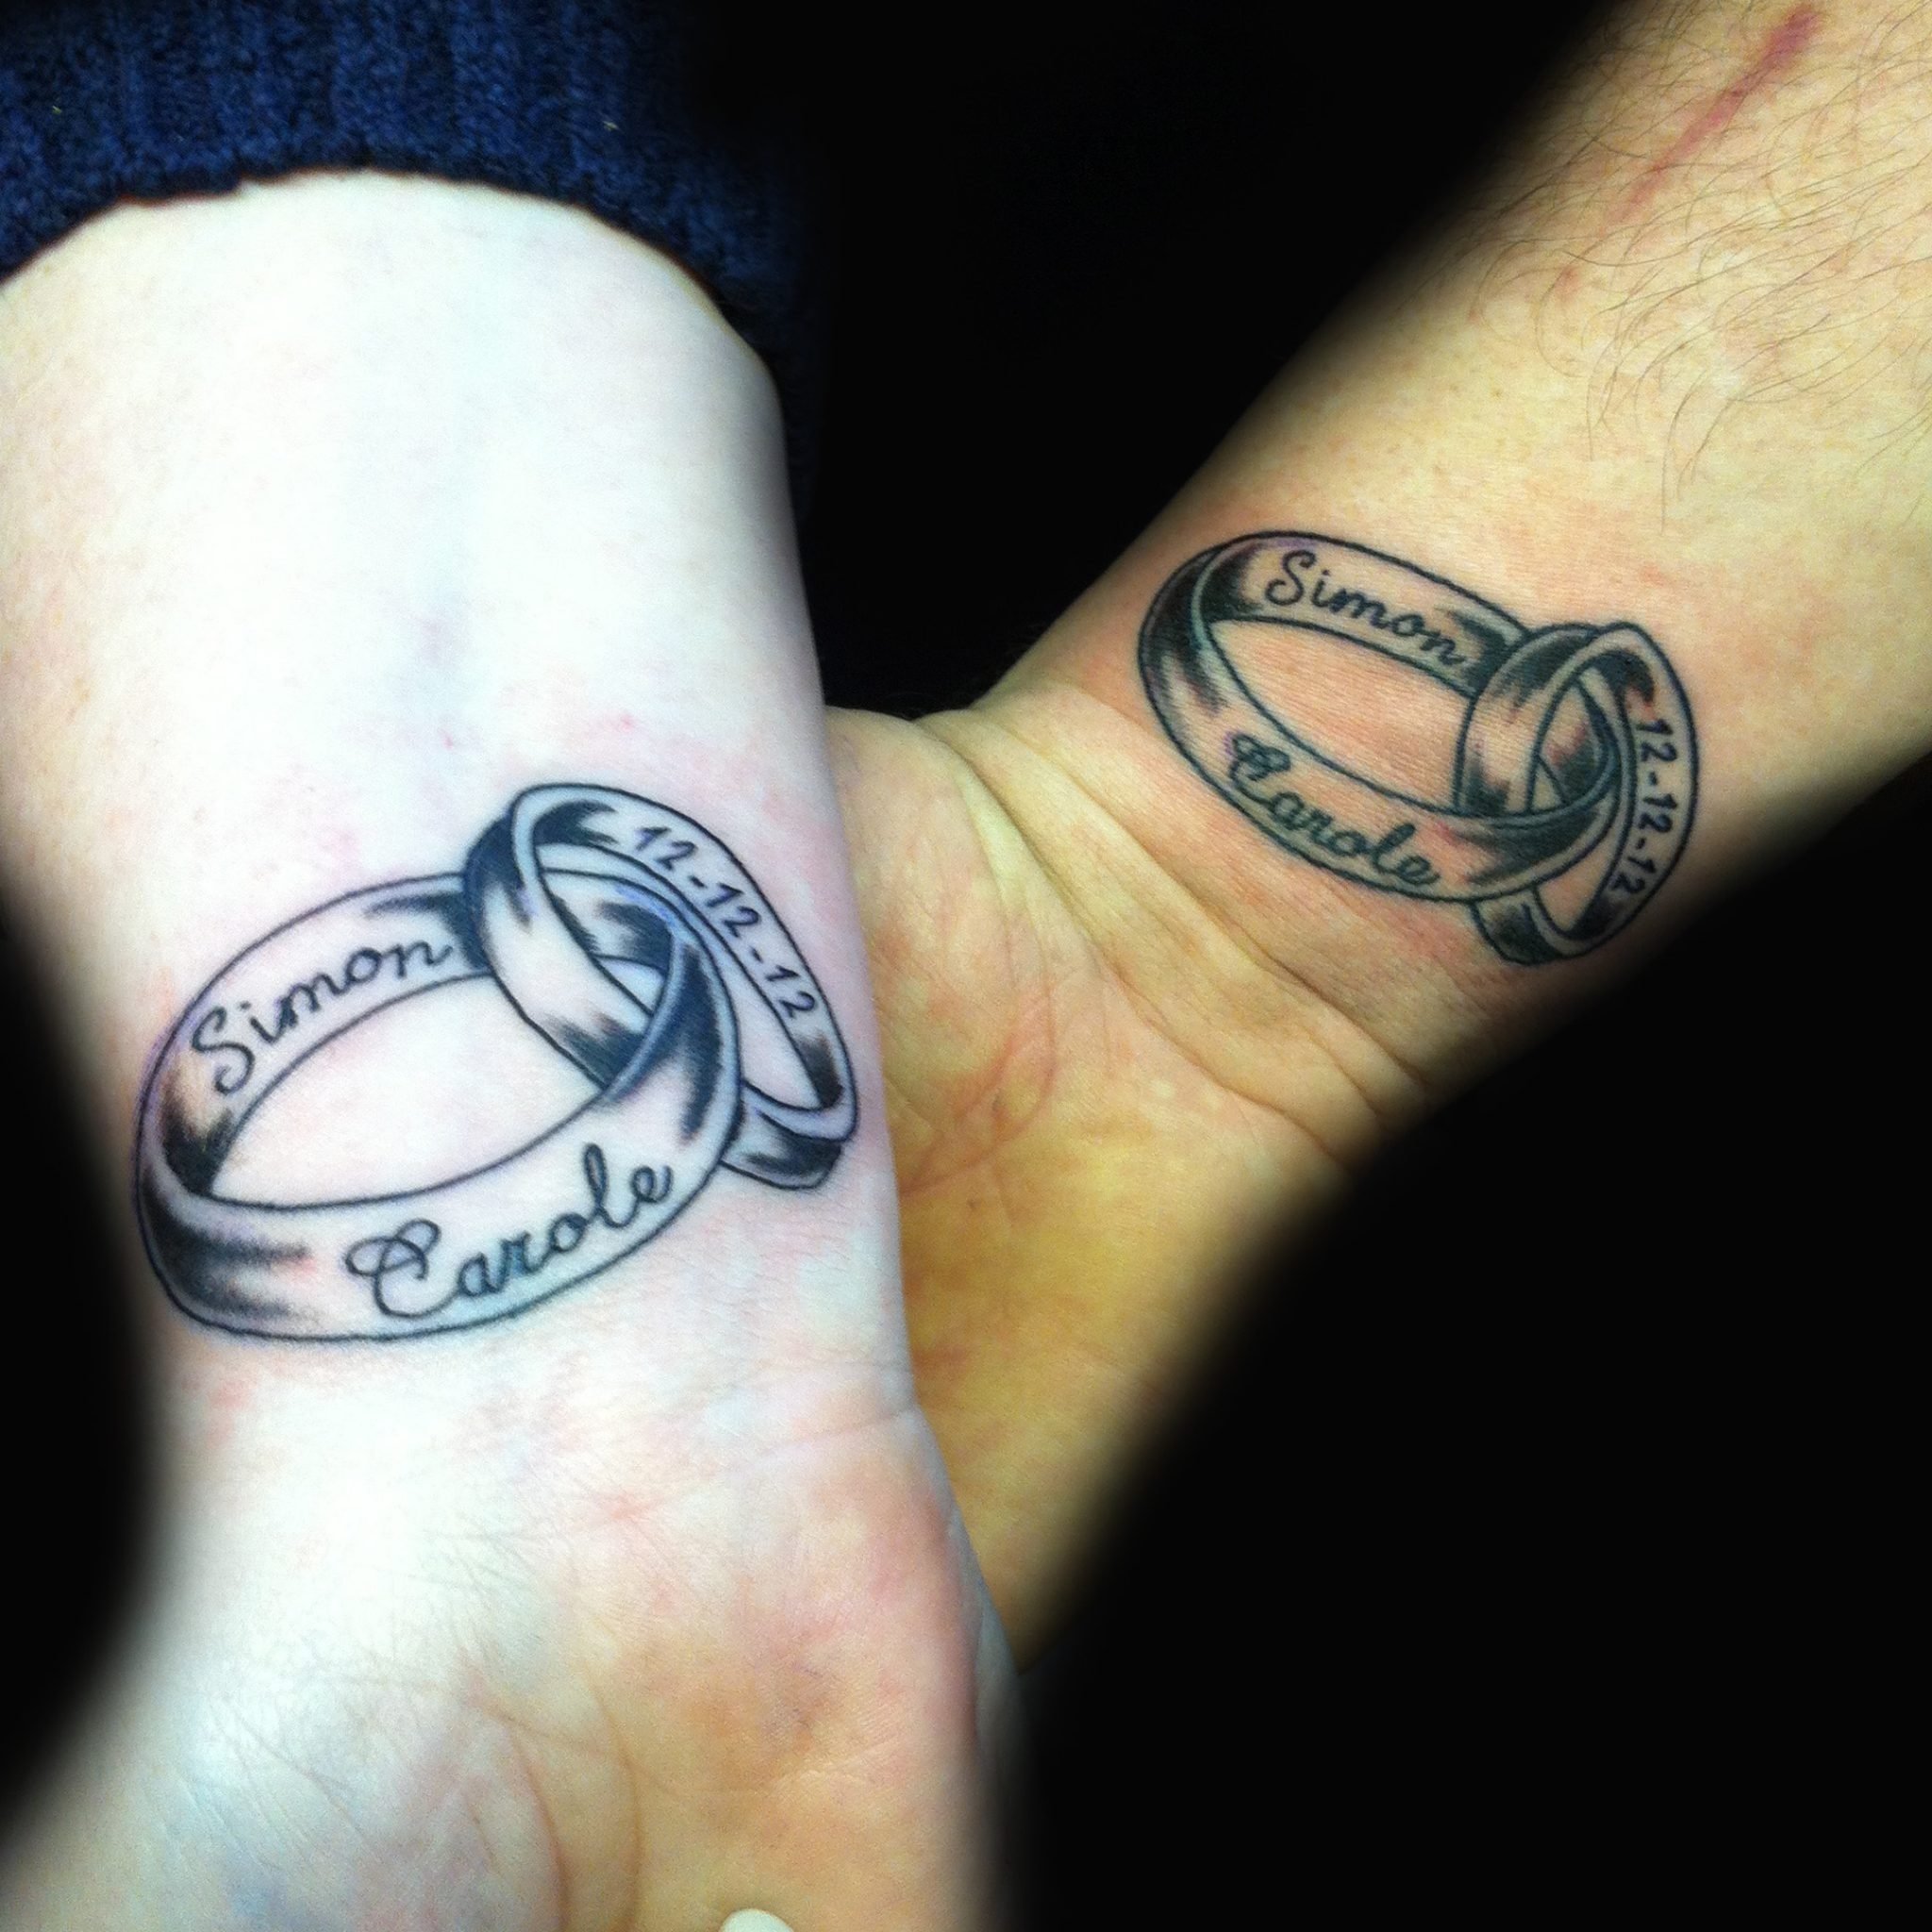 Married Tattoo Ideas ~ 25 Couple Tattoos Ideas Gallery Matching Tattoos Married Wilsamusti